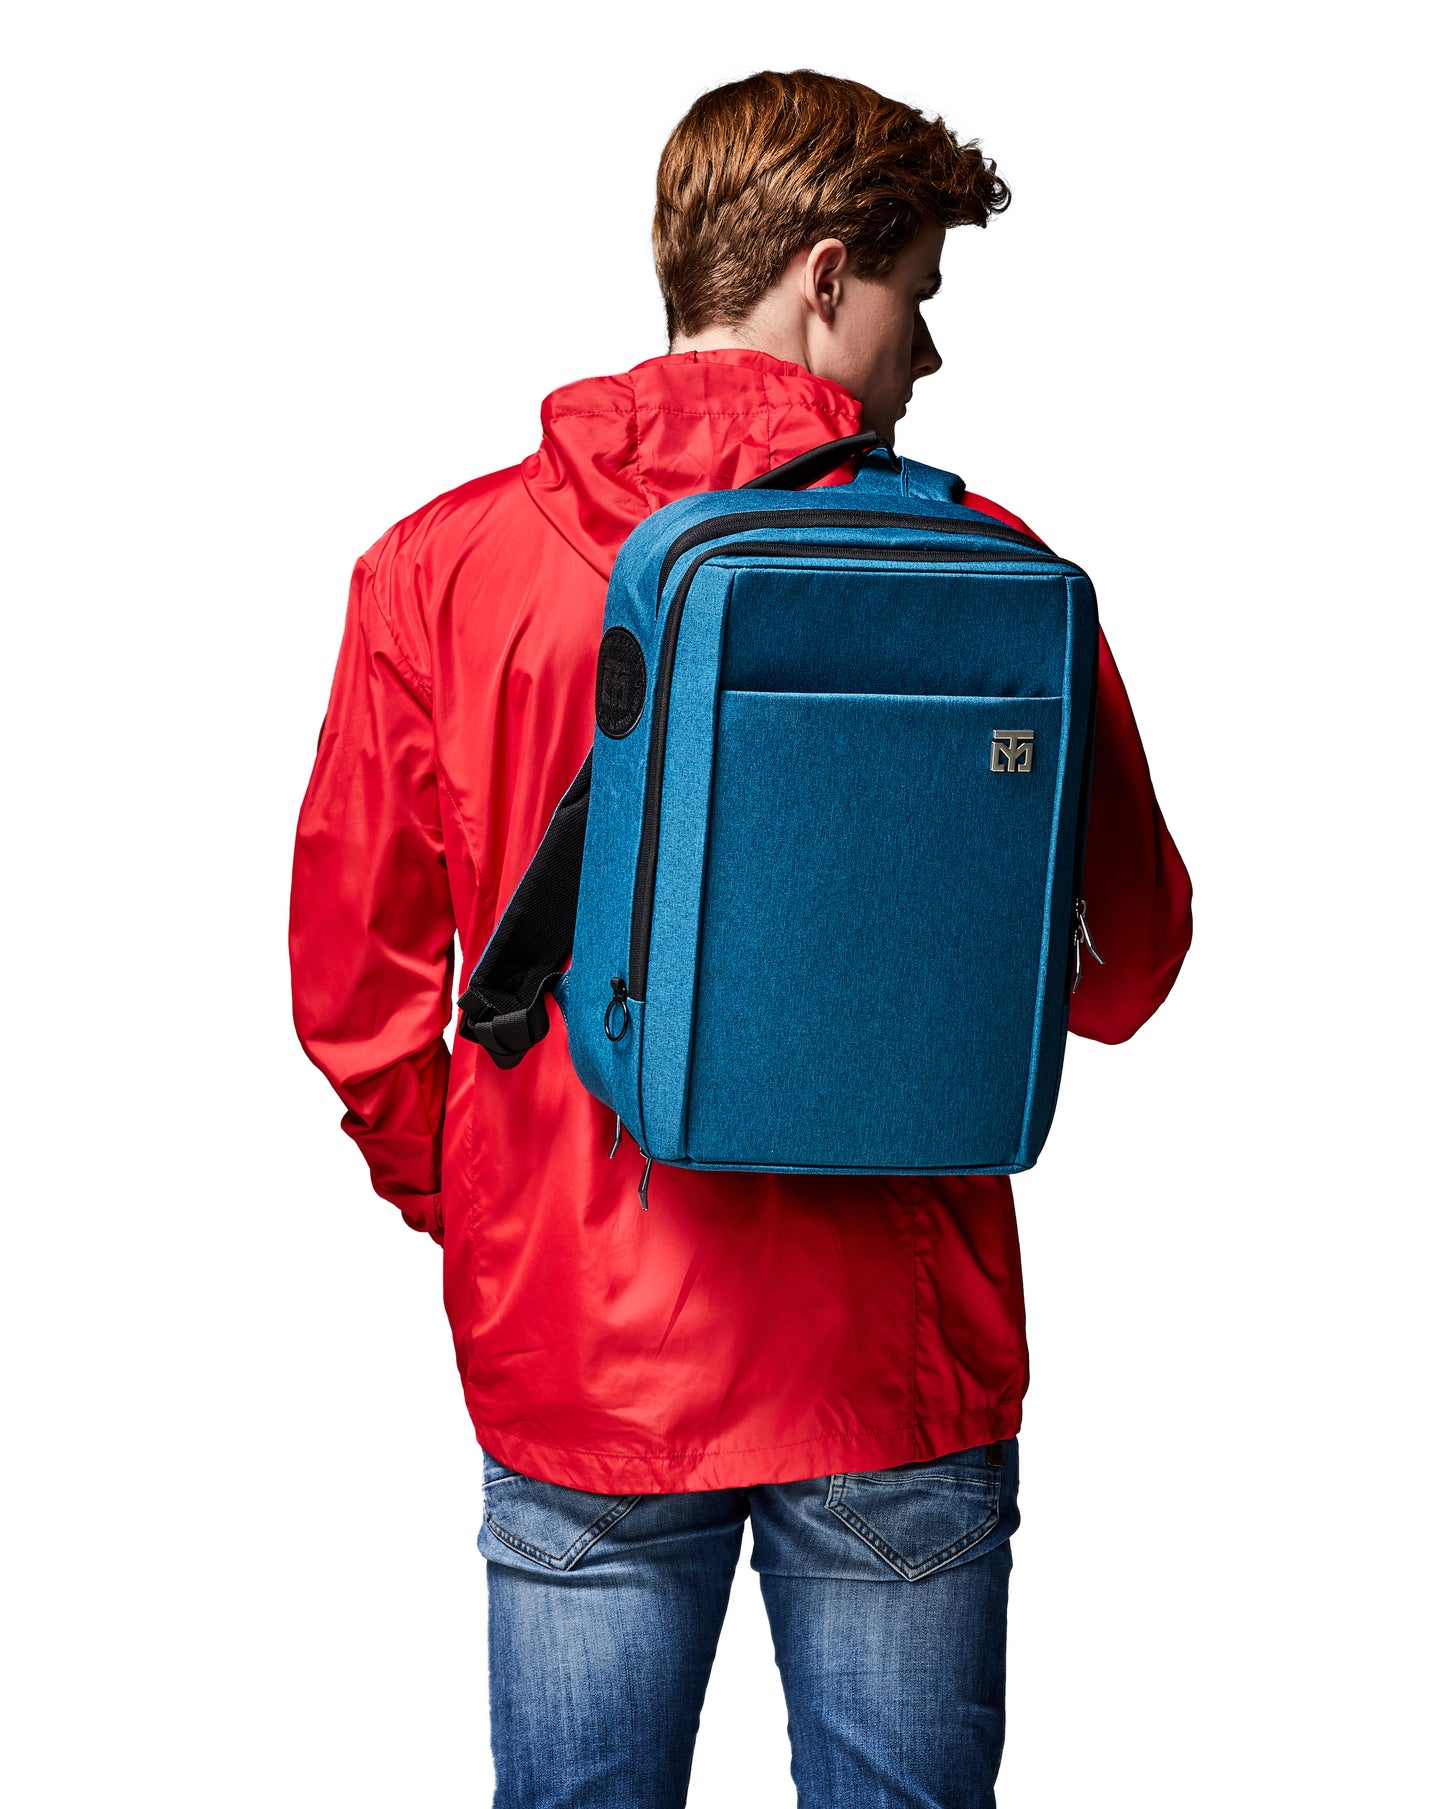 MATO Backpack 1.5 (Peacock Blue)